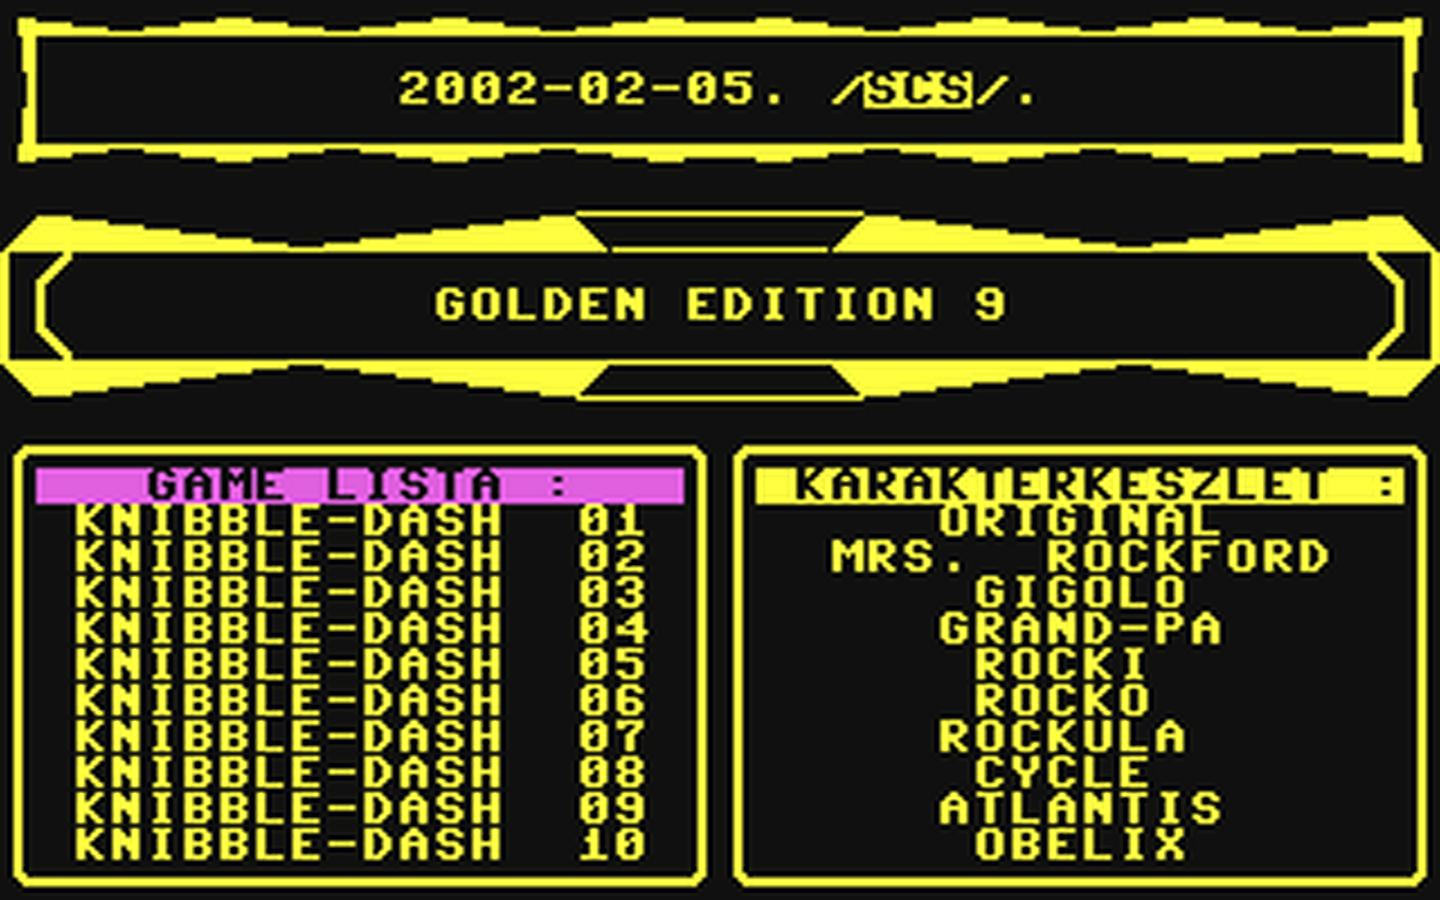 C64 GameBase Golden_Edition_09 (Not_Published) 2002